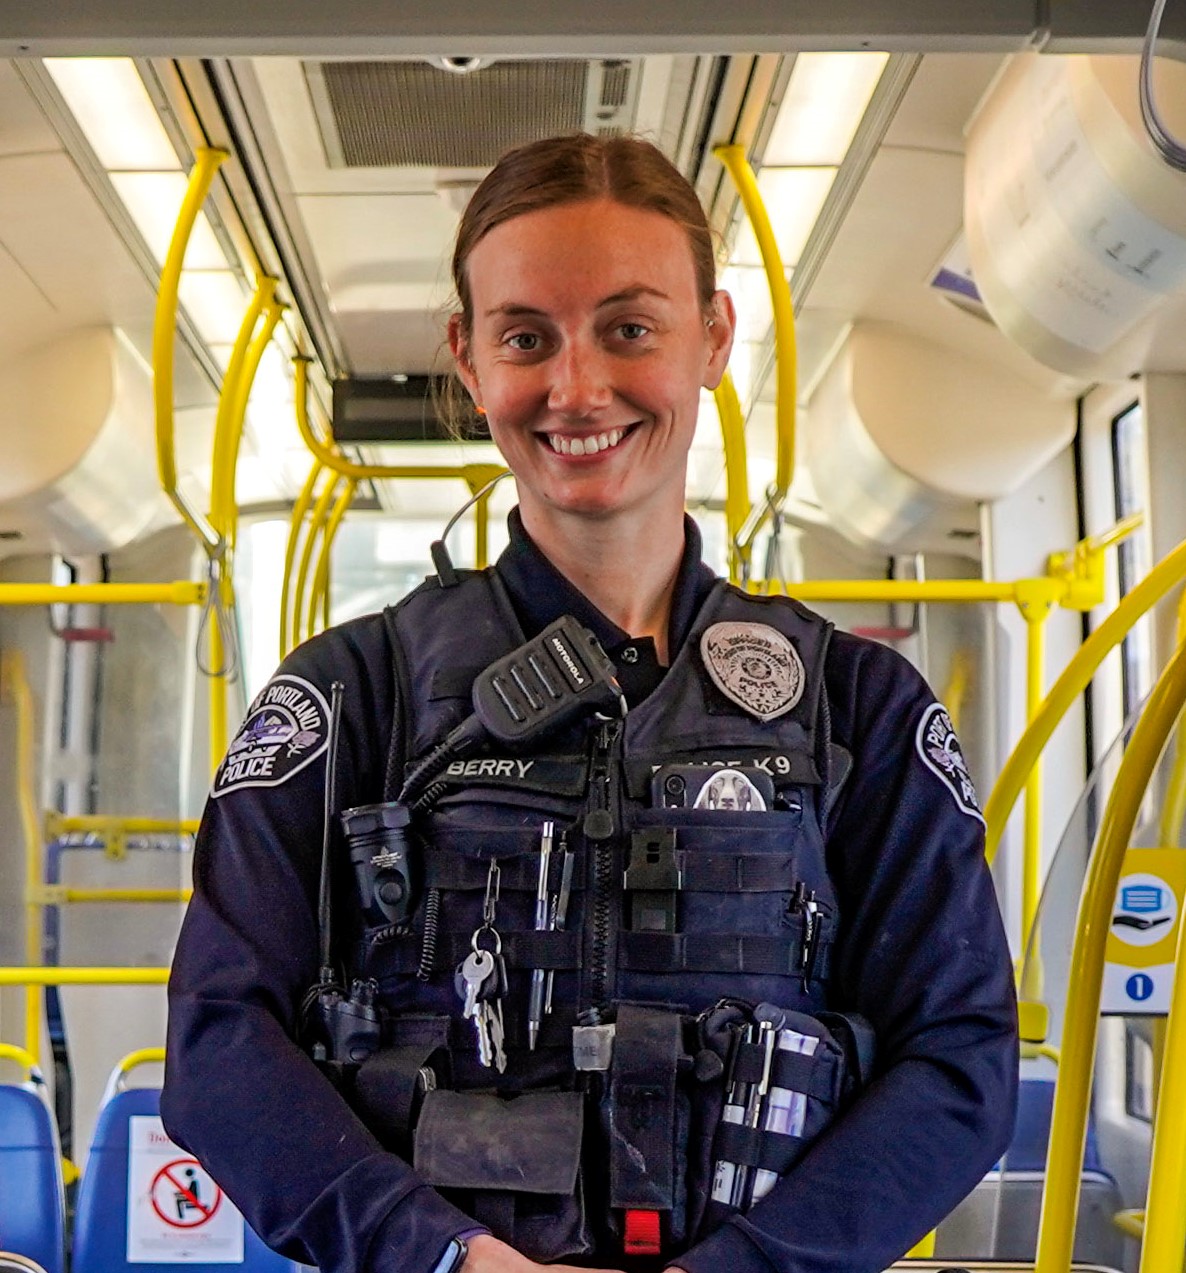 Transit Police officer